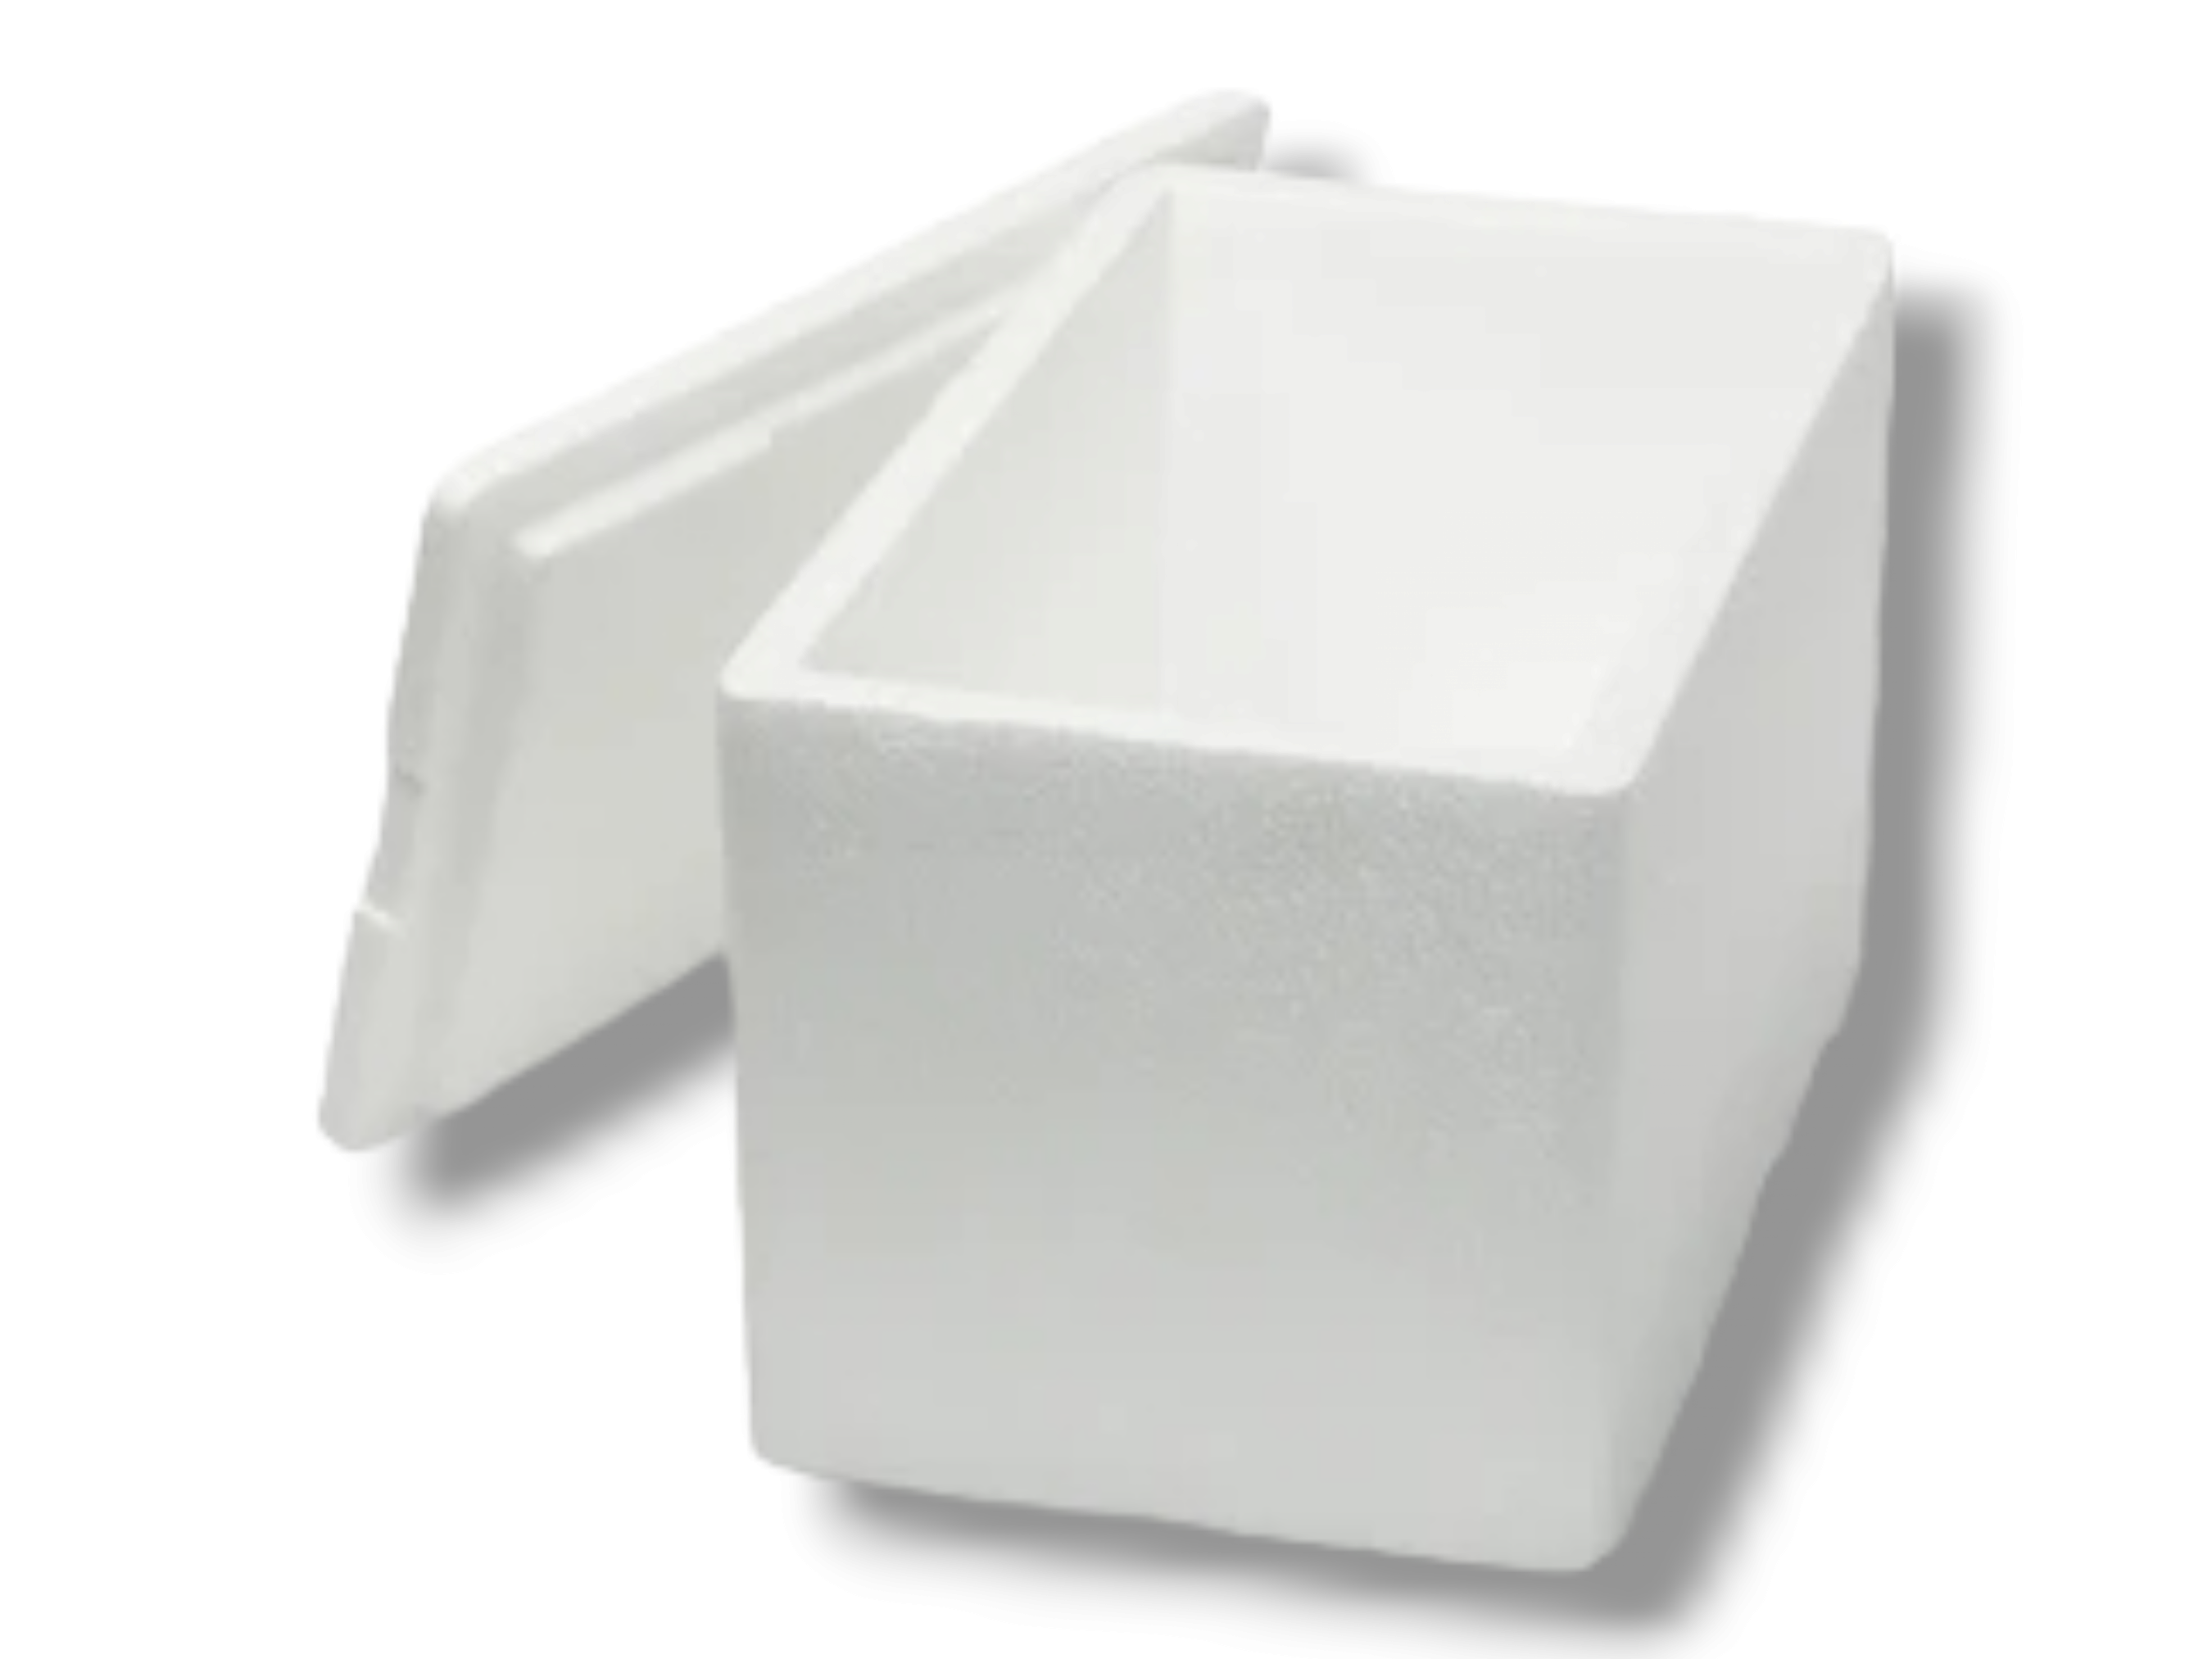 Polystyrene Cooler Box 15L Thermal Storage Box